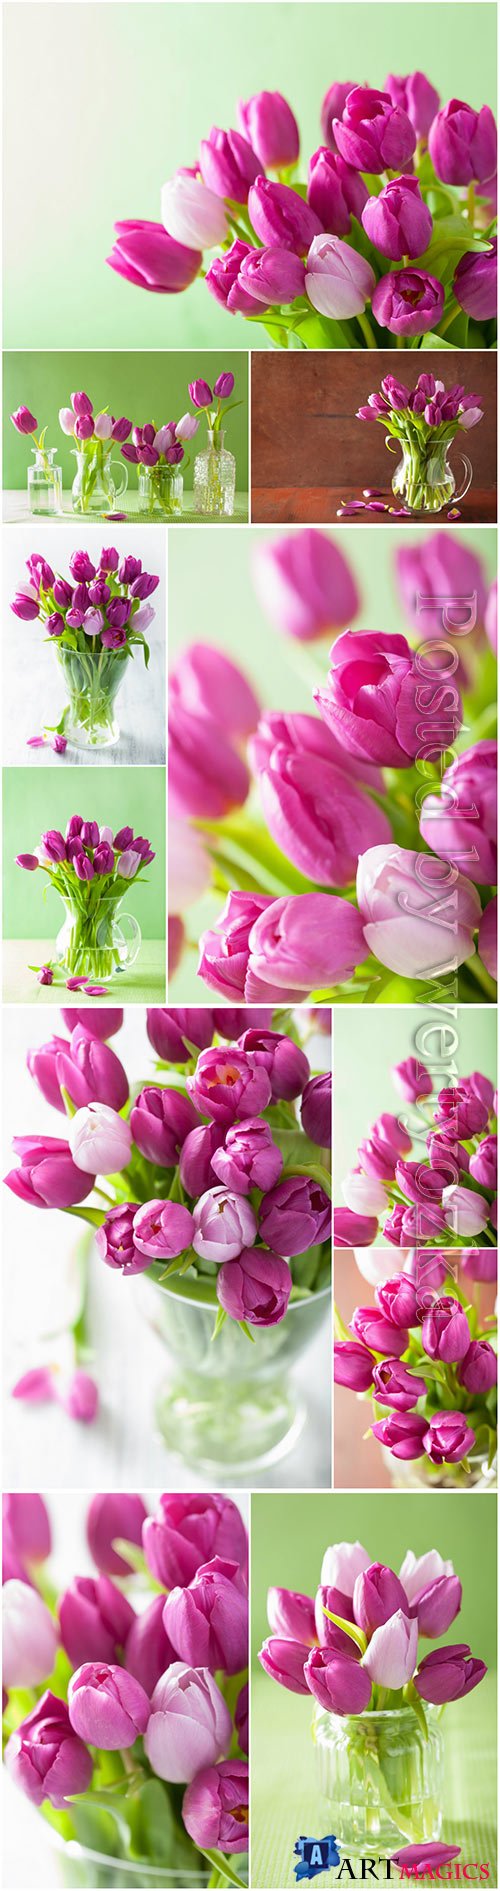 Tulips, spring flowers beautiful stock photo